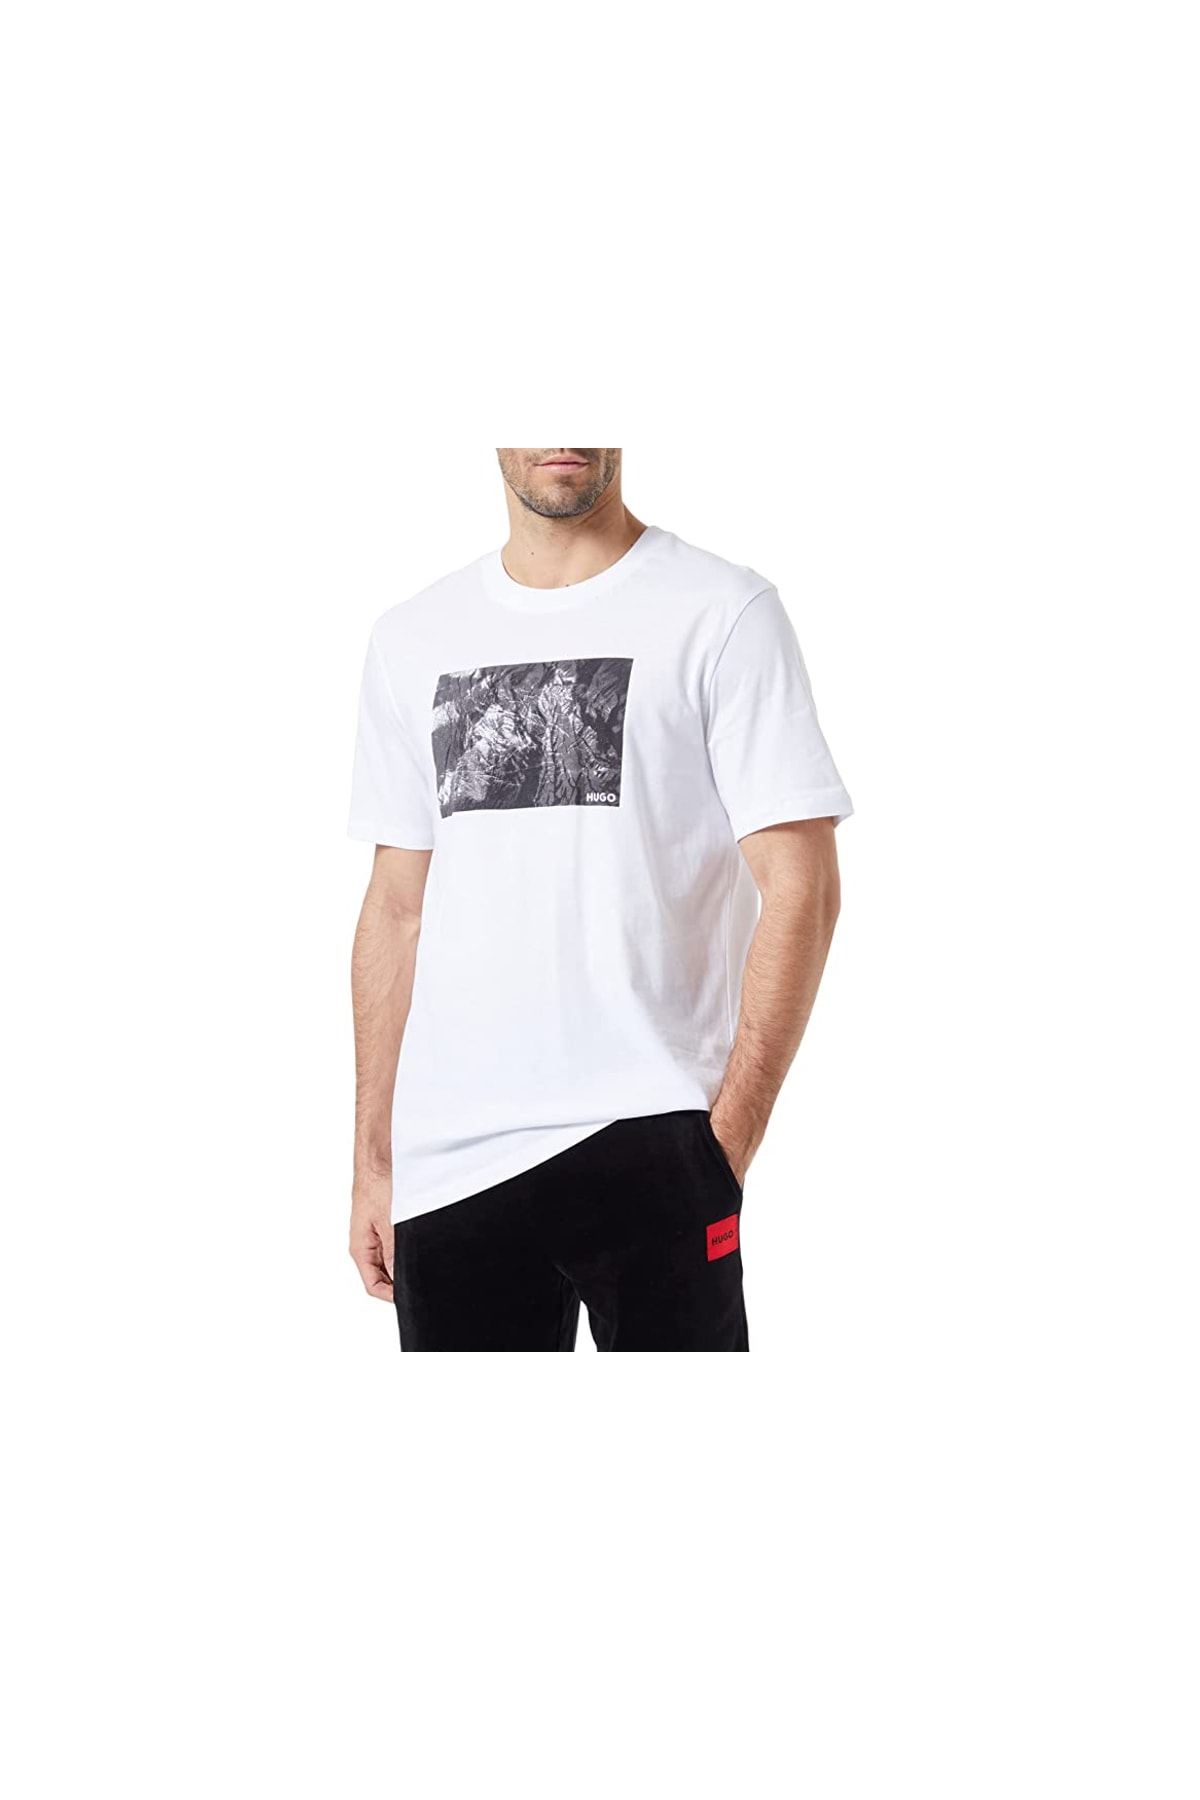 Hugo Boss Hemd Weiß Regular Fit Fast ausverkauft